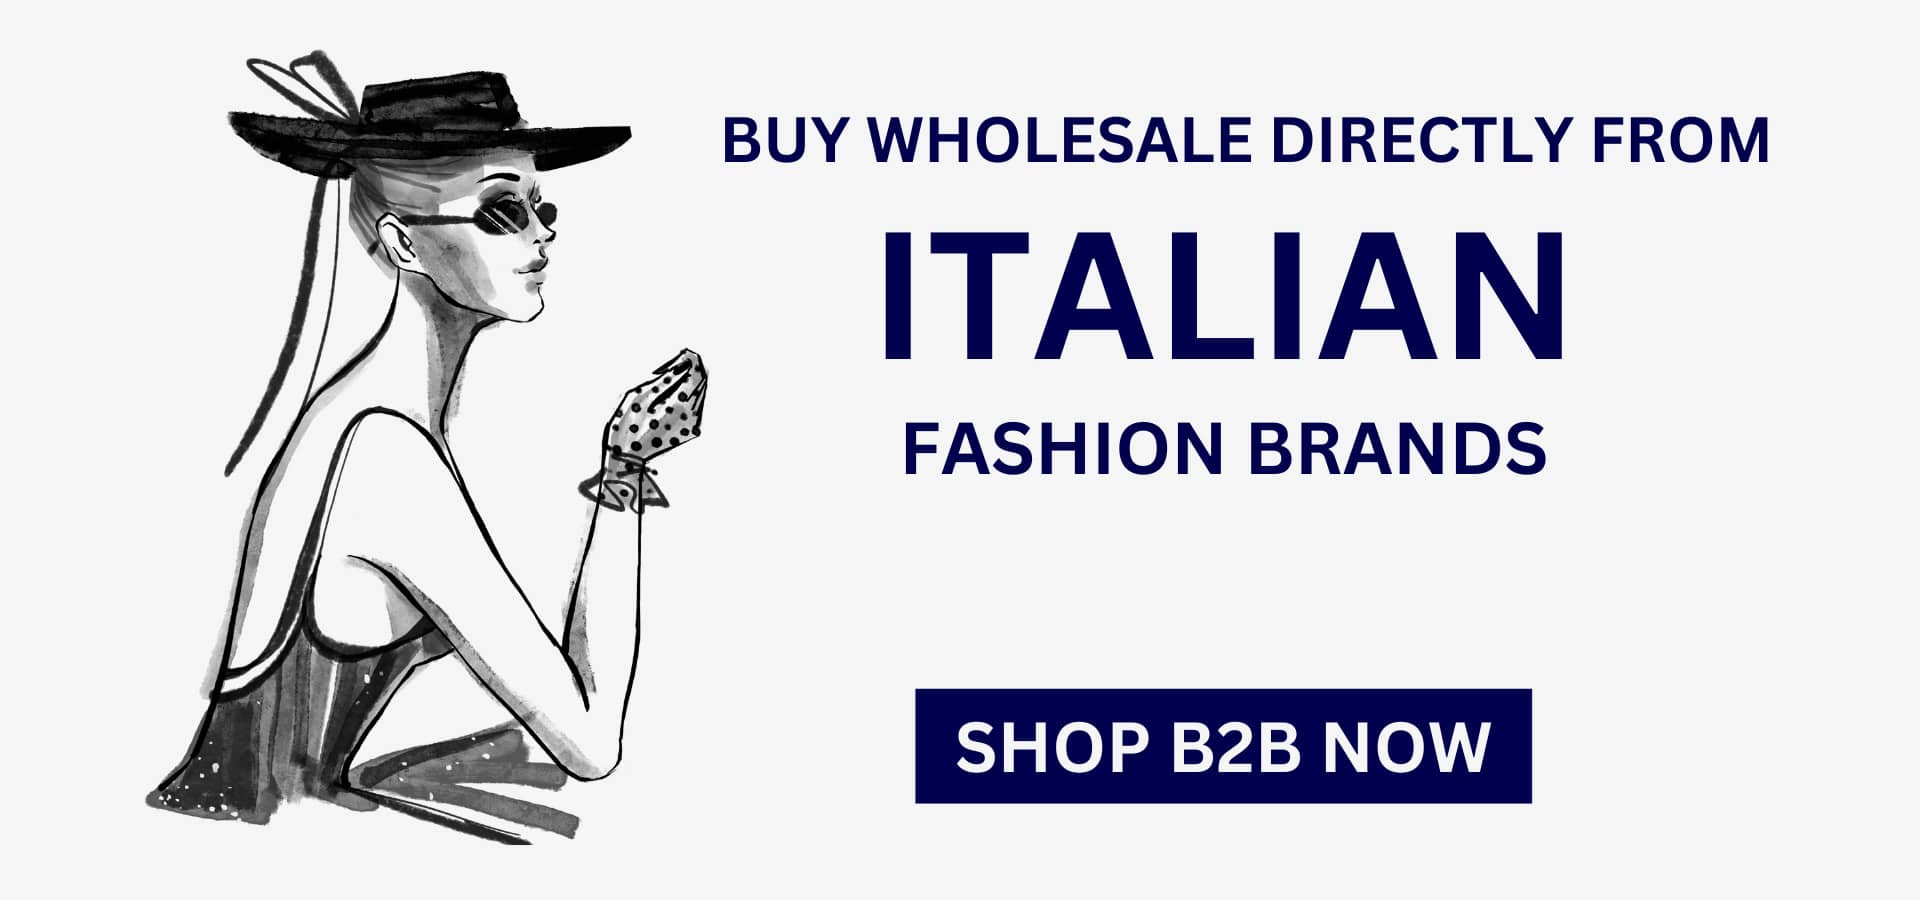 http://www.italianmodamall.com/customfiles/images/ItalianModa-MALL-wholesale-fashion-madeinitaly-1.jpg